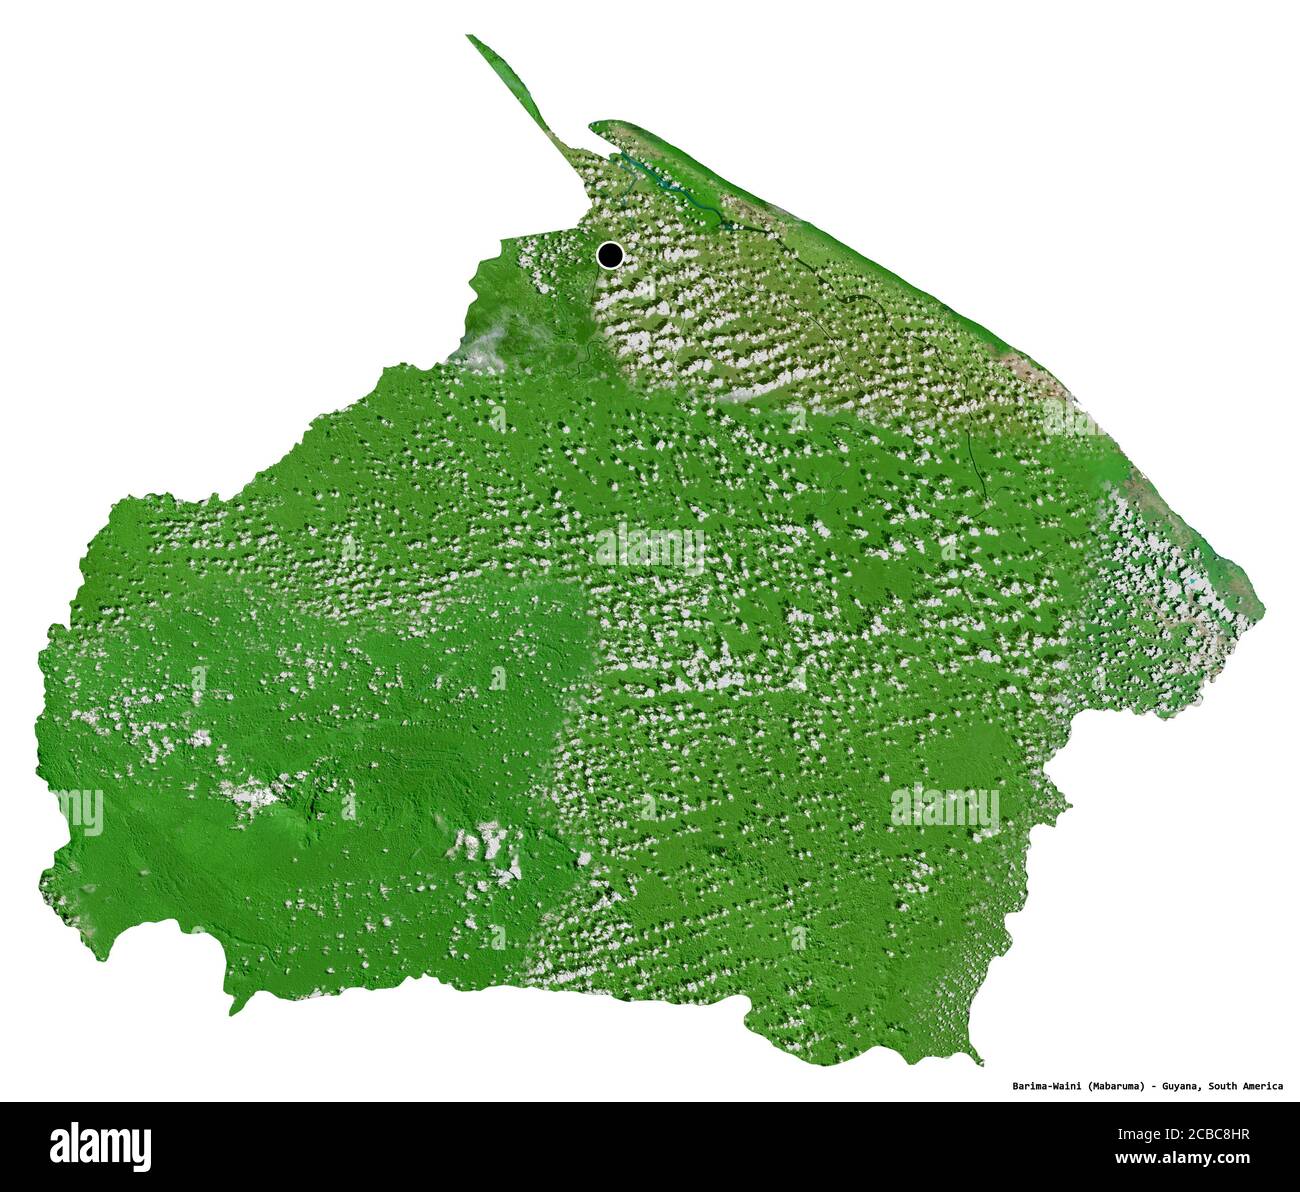 Shape of Barima-Waini, region of Guyana, with its capital isolated on white background. Satellite imagery. 3D rendering Stock Photo